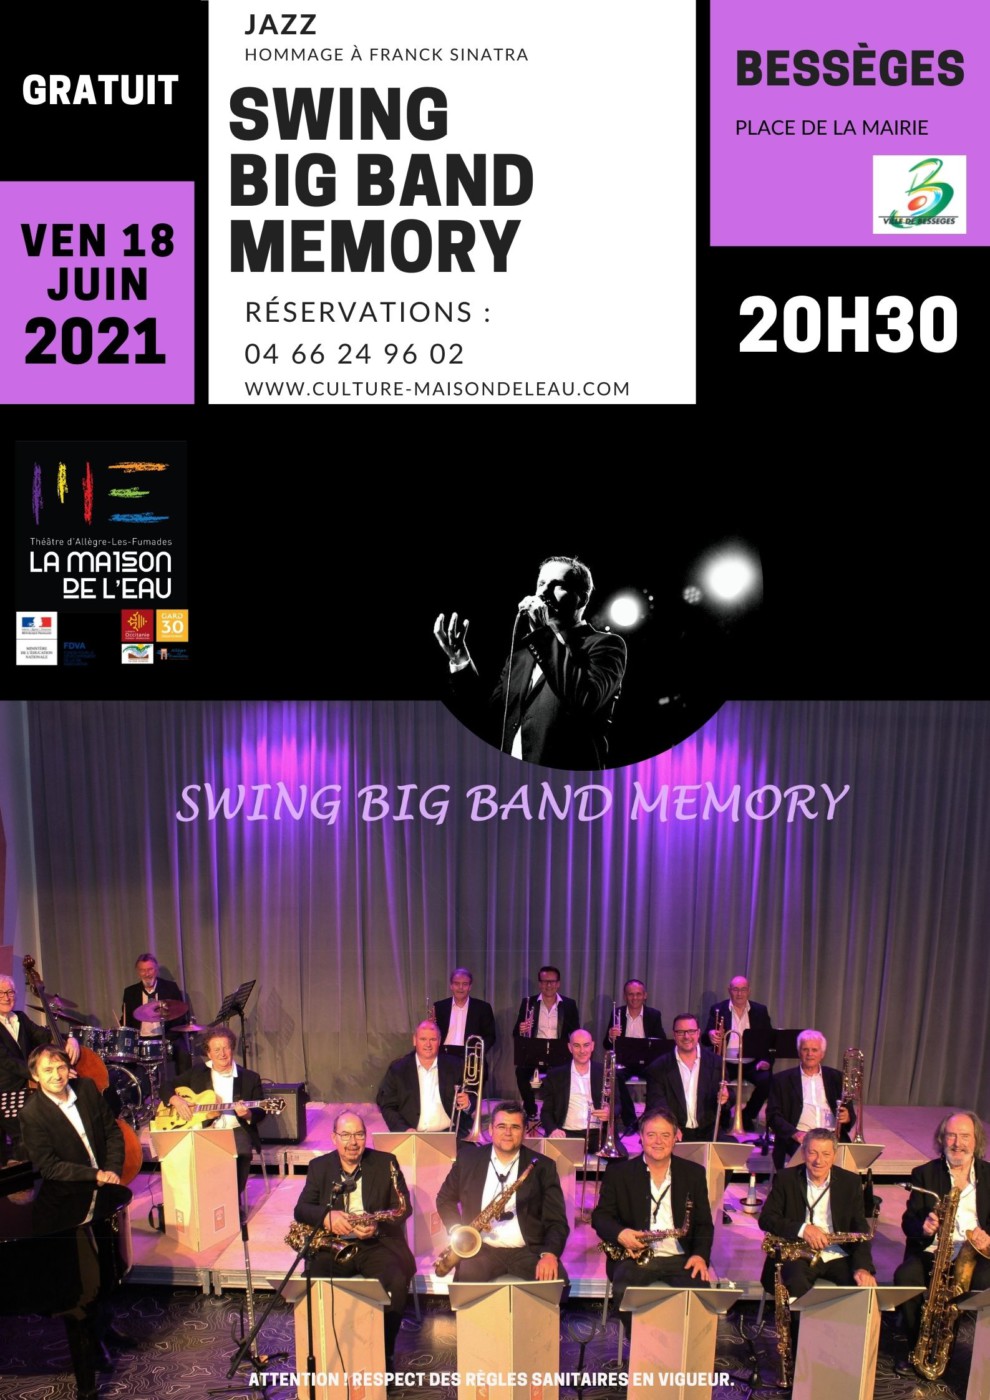 Concert Swing Big Band Memory Mairie De Bessèges